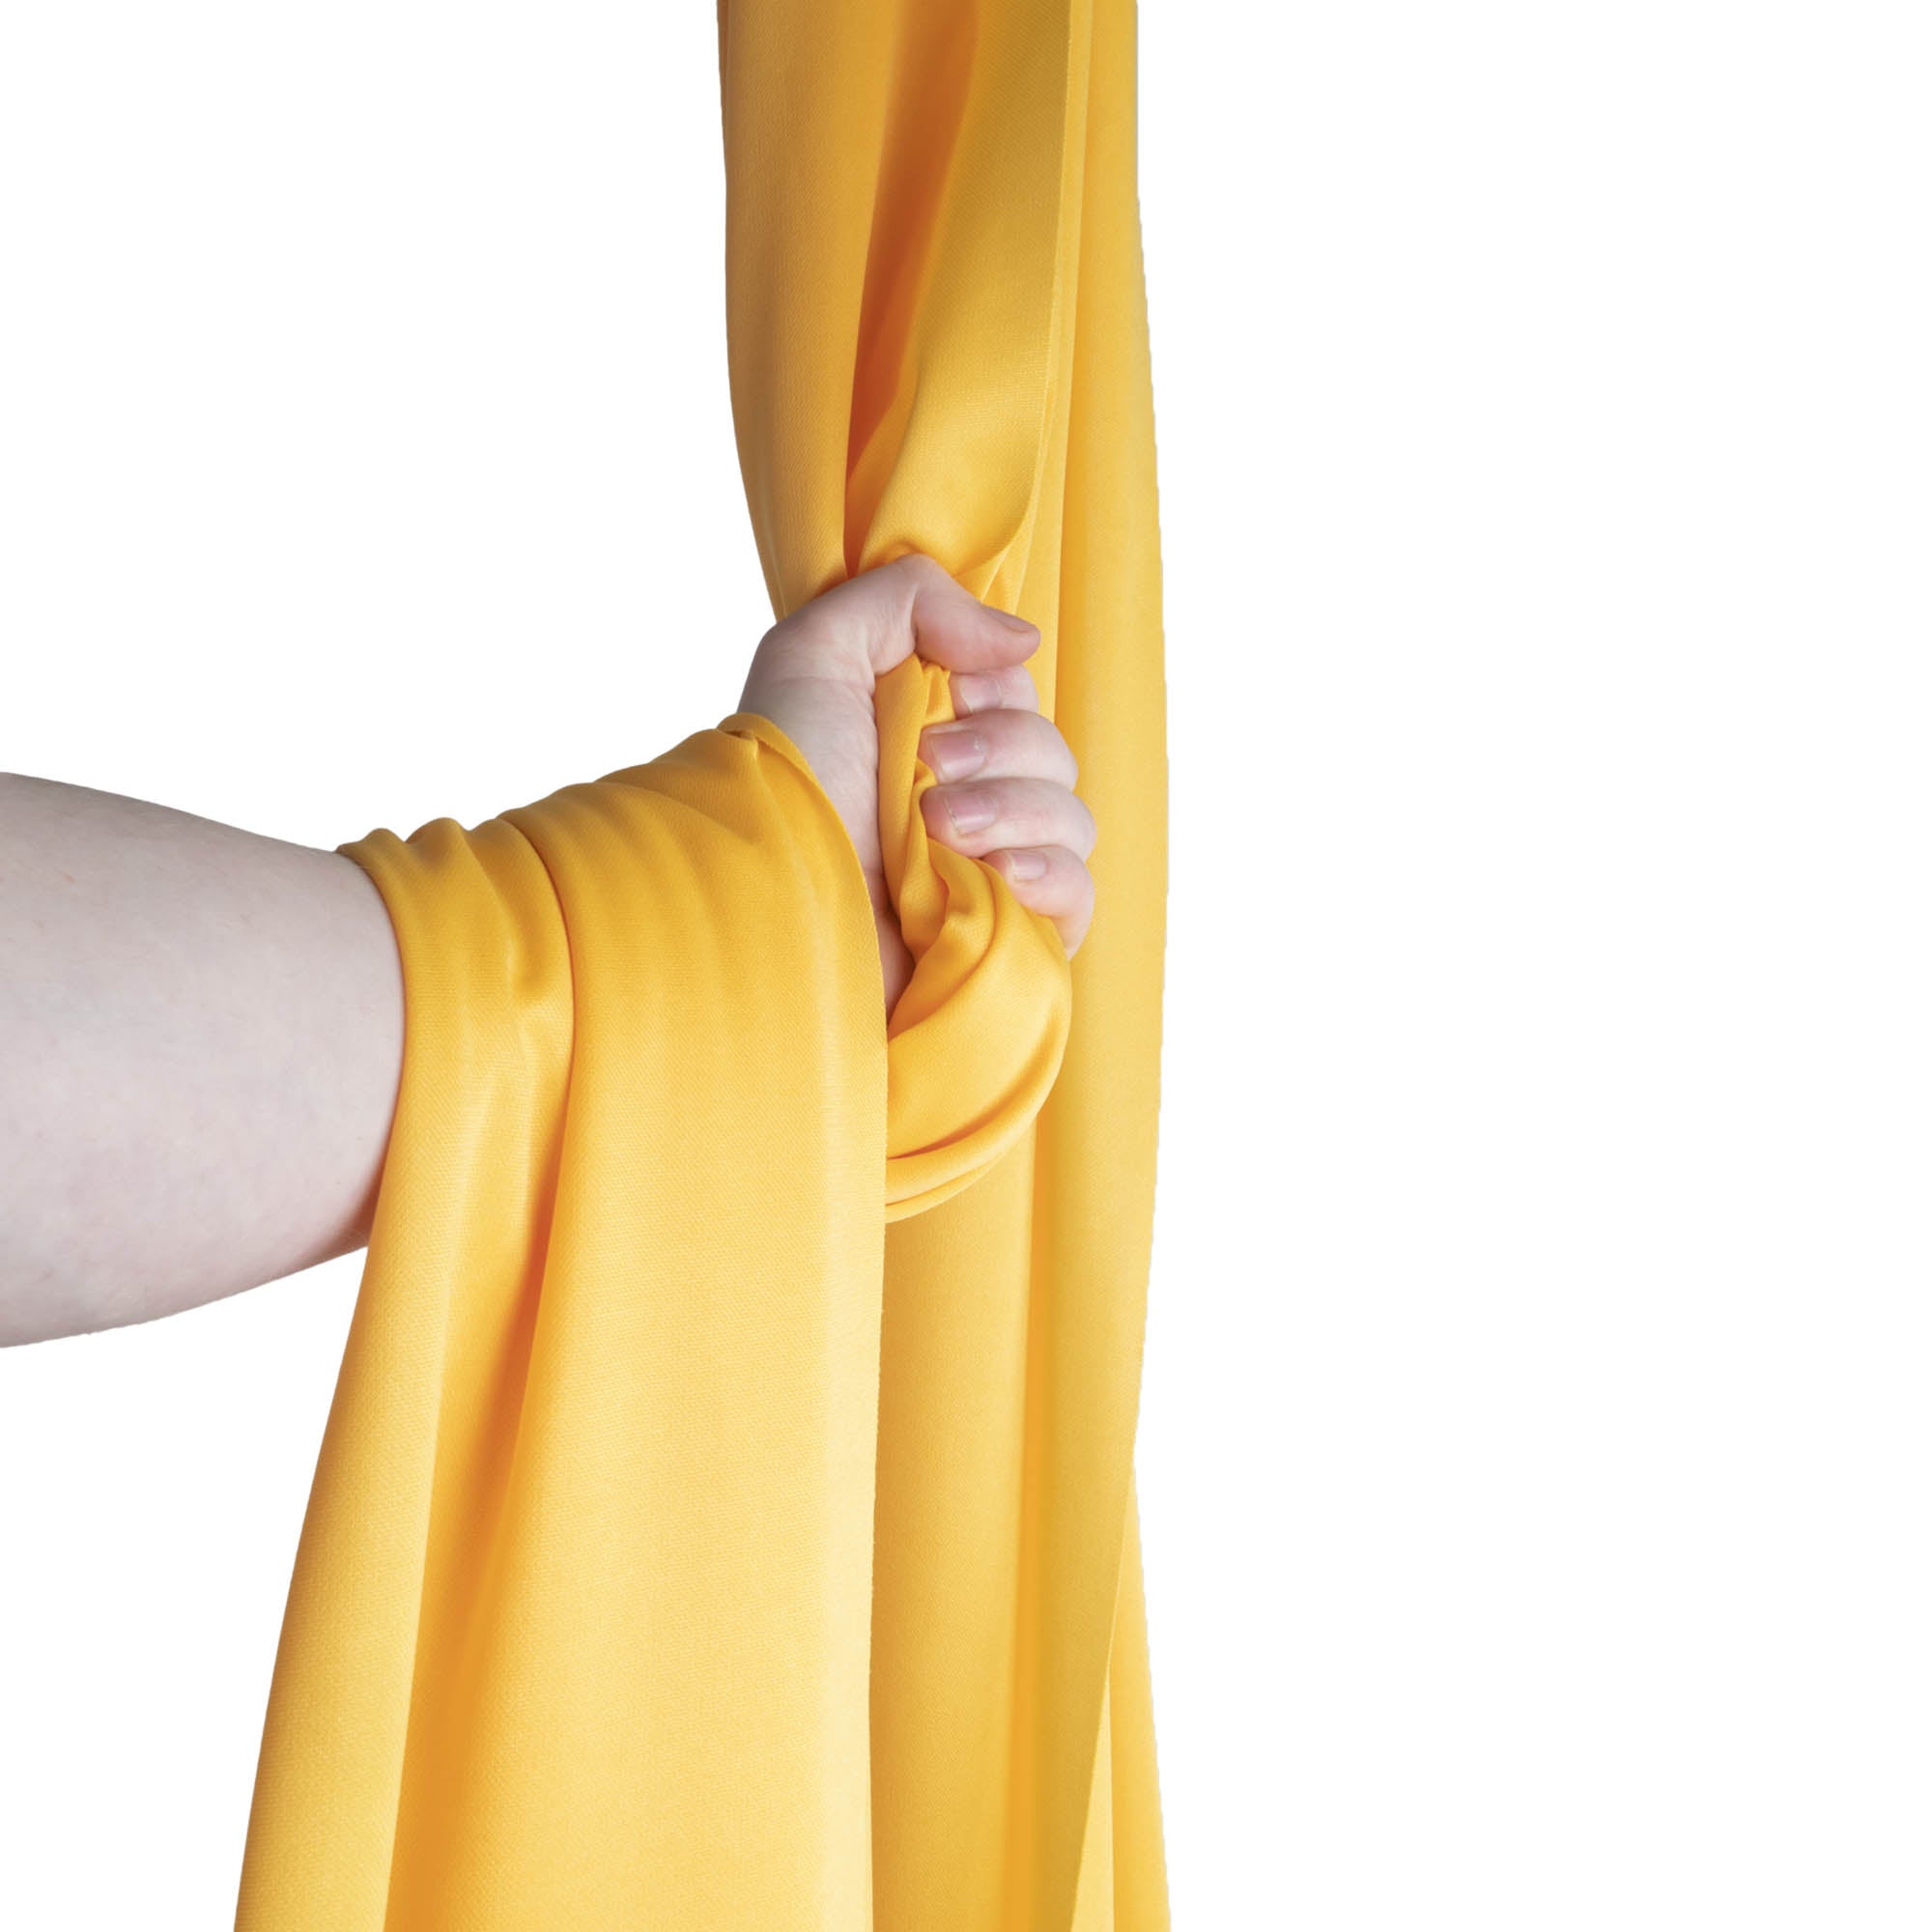 Golden yellow silk wrapped around hand